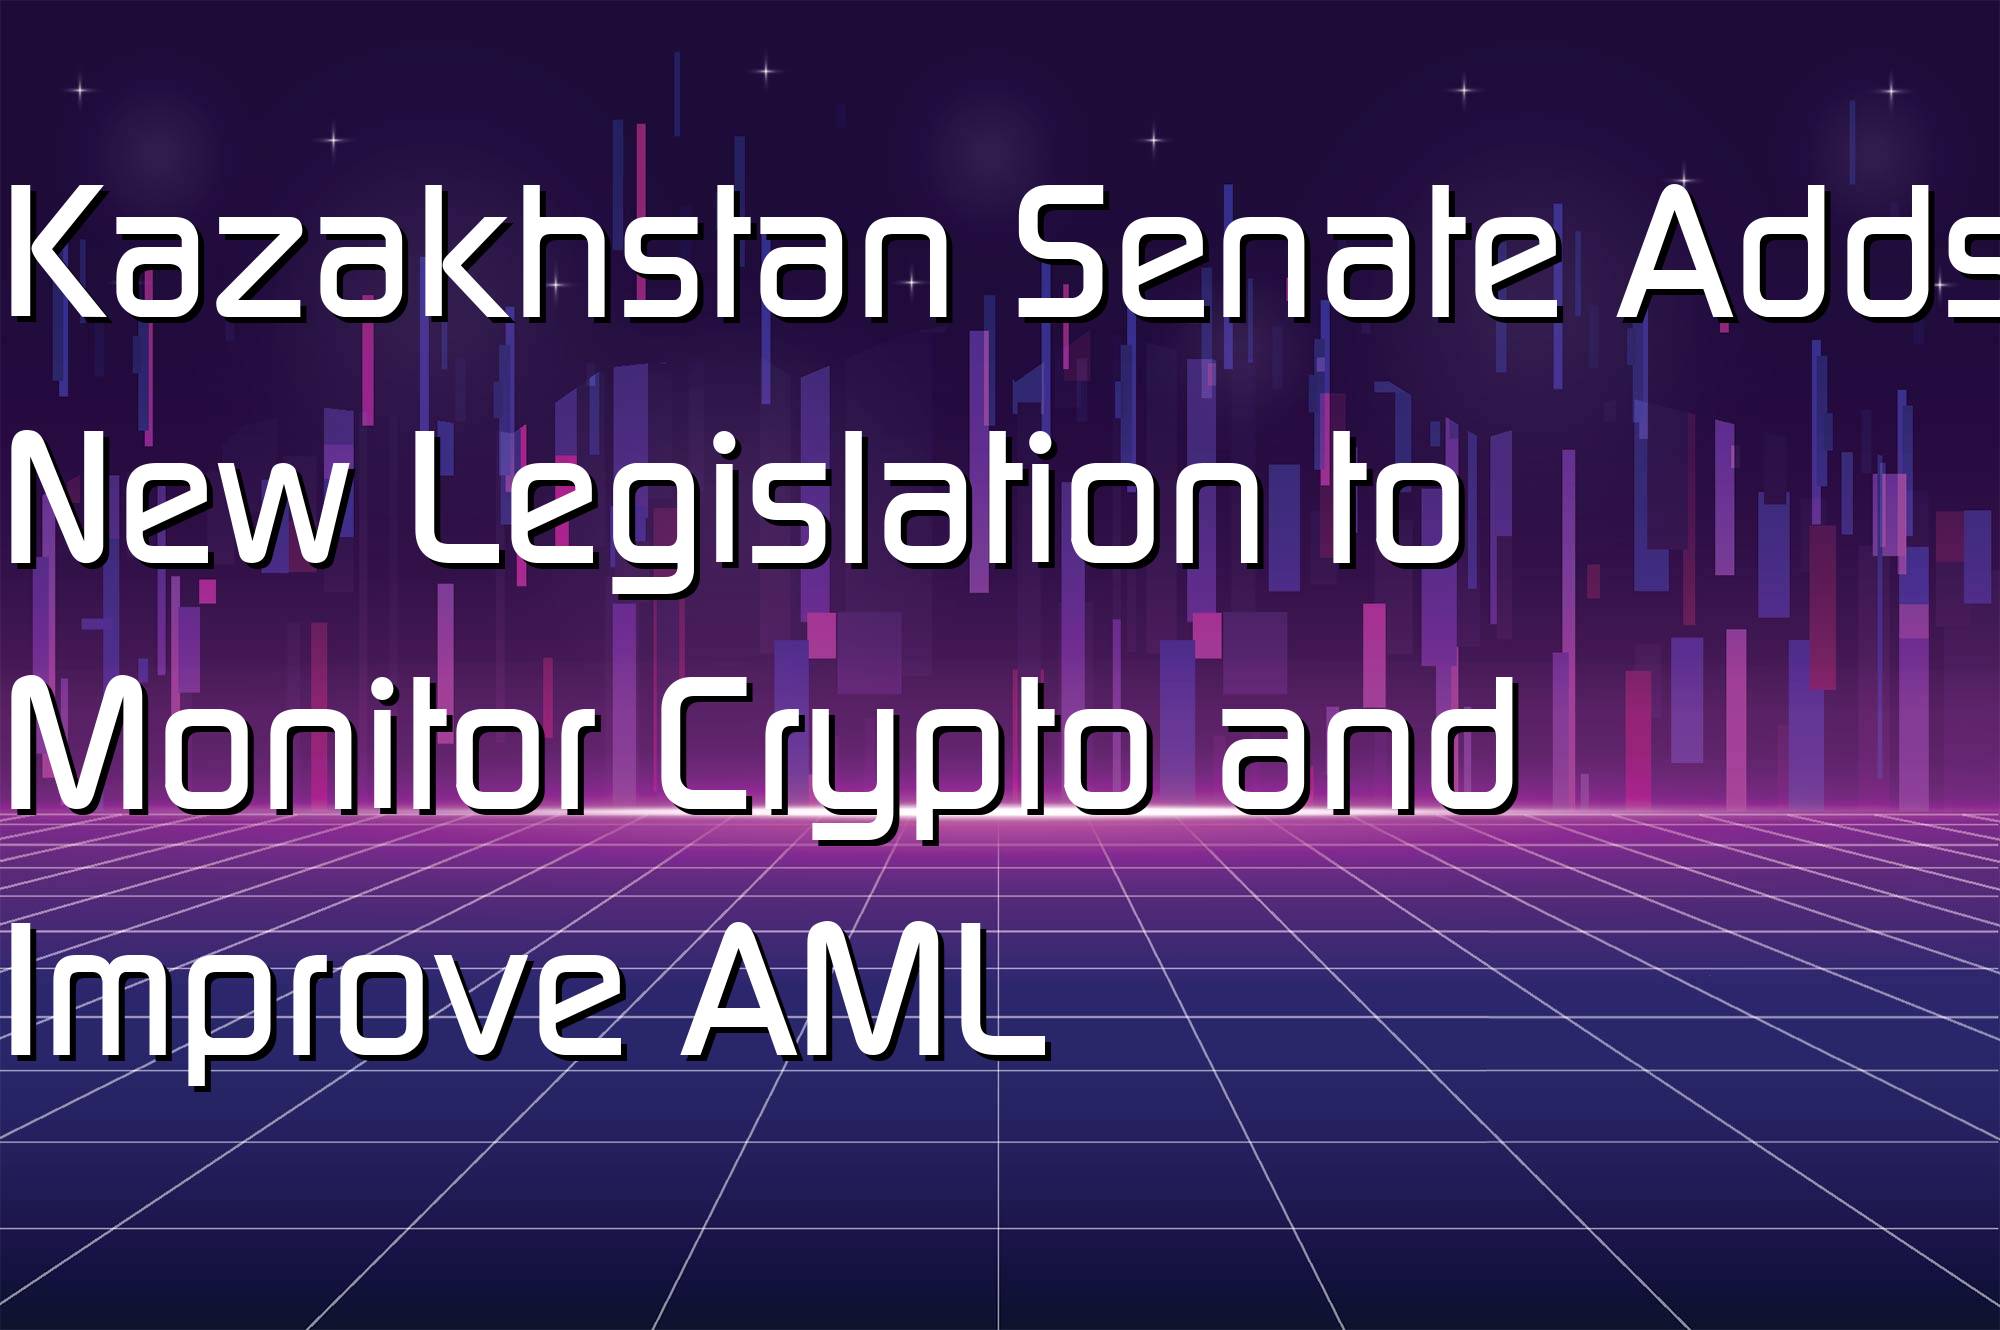 @$66333: Kazakhstan Senate Adds New Legislation to Monitor Crypto and Improve AML